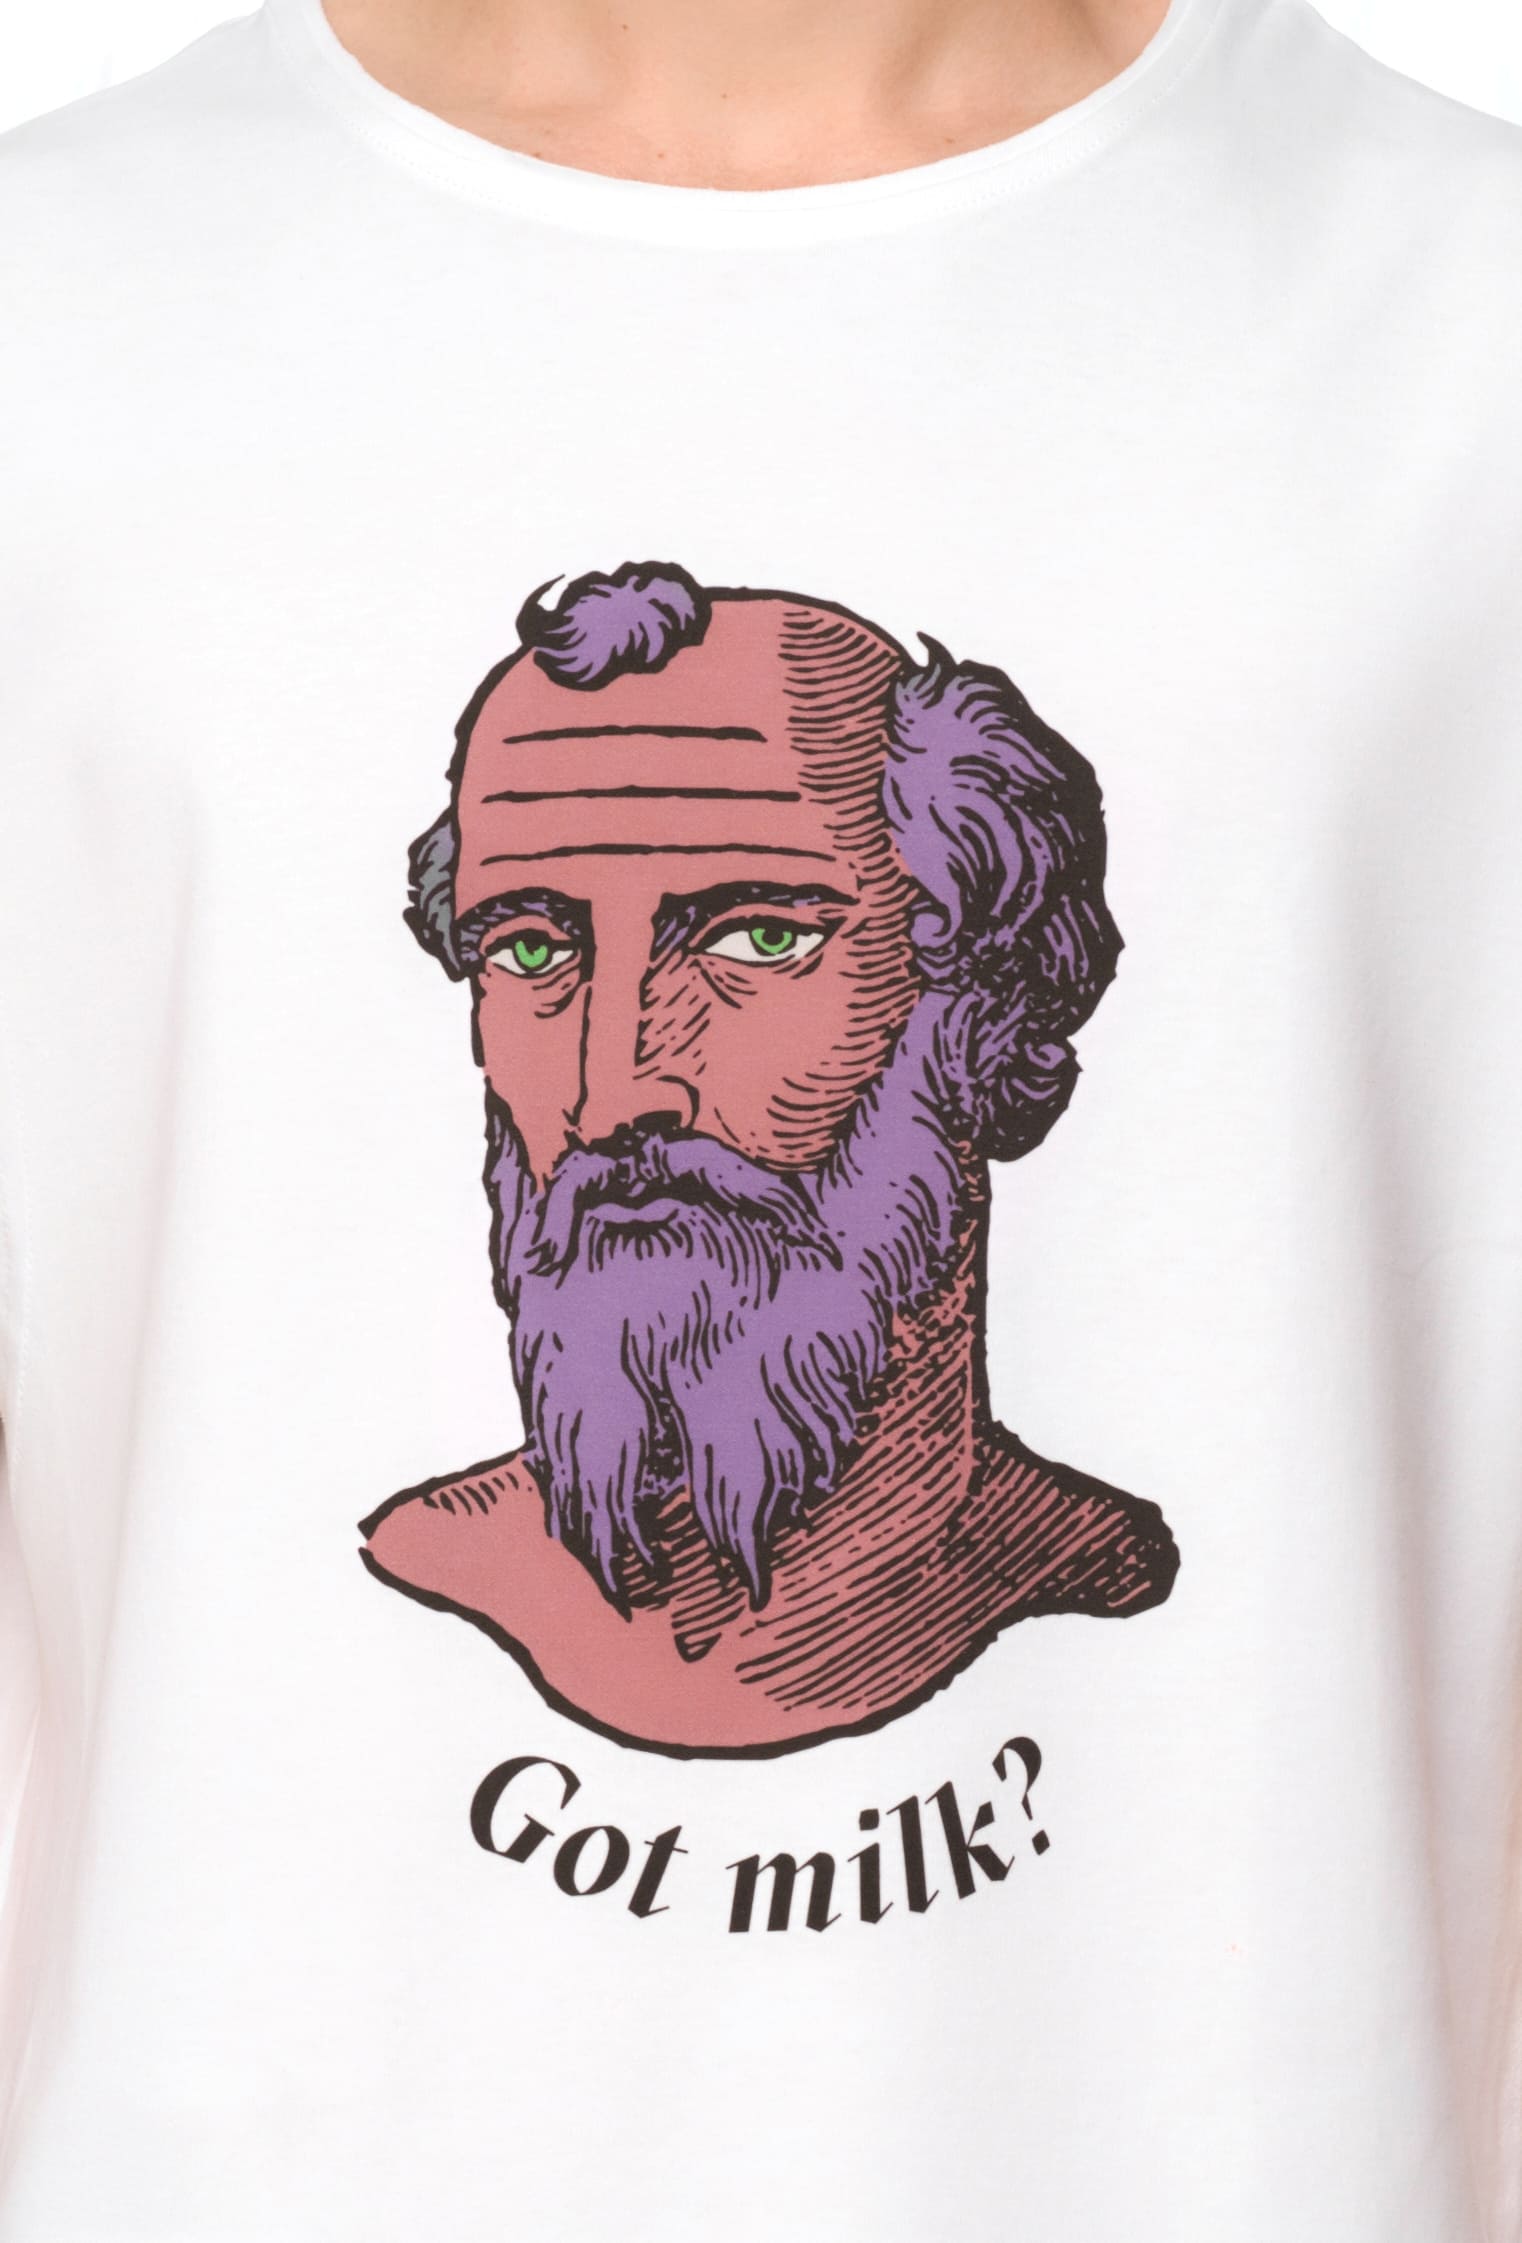 Got Milk? Top